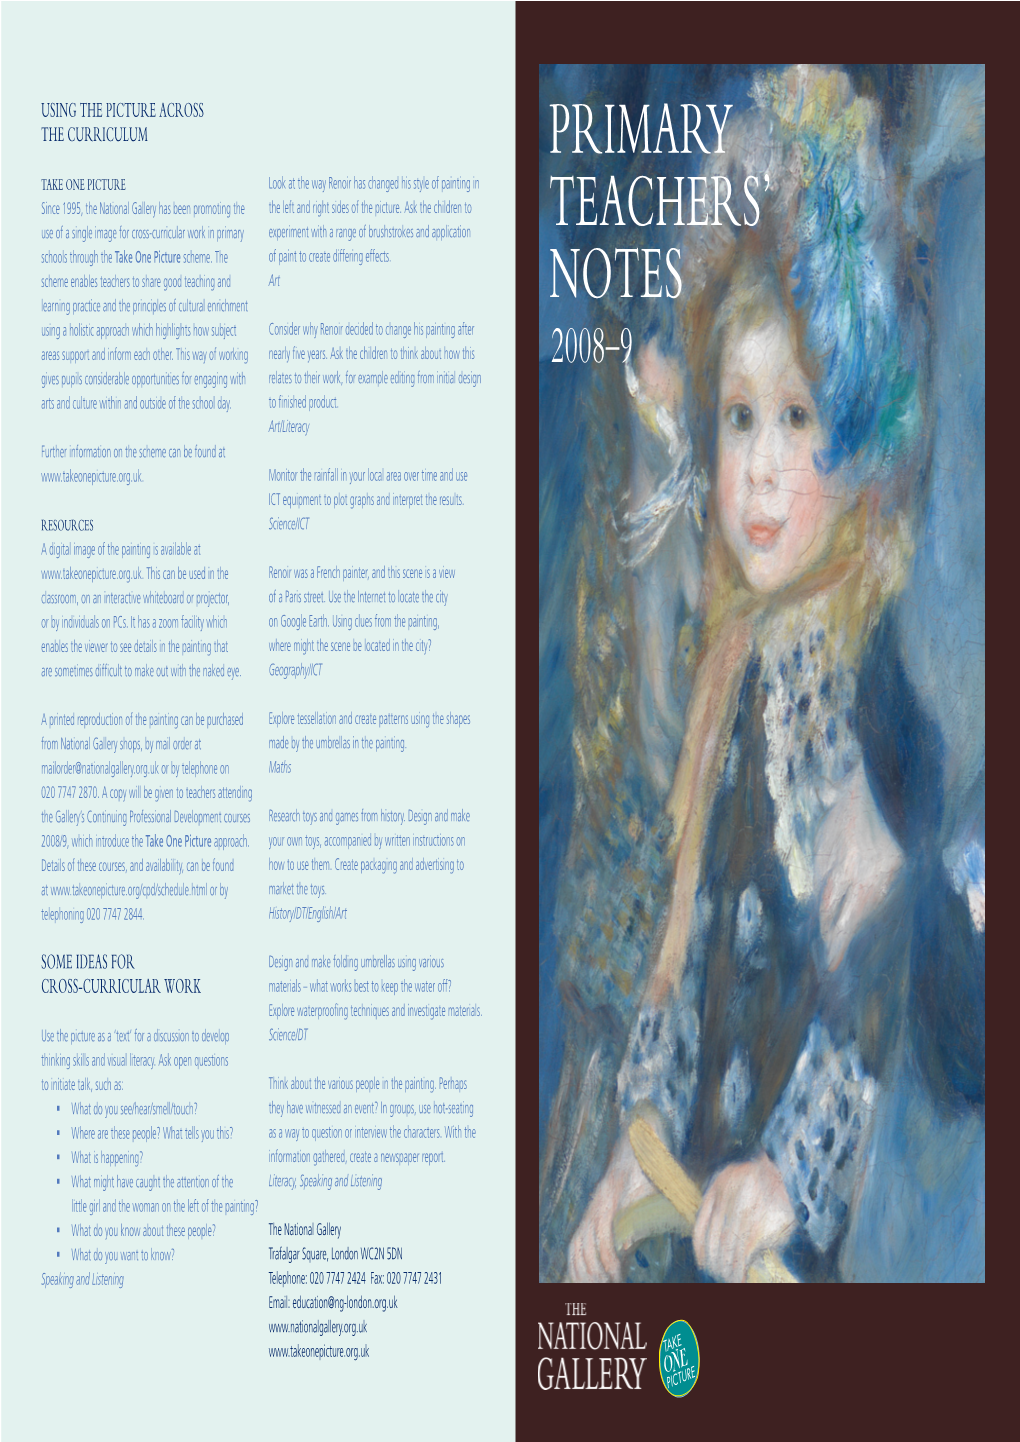 Primary Teachers' Notes: the Umbrellas by Renoir